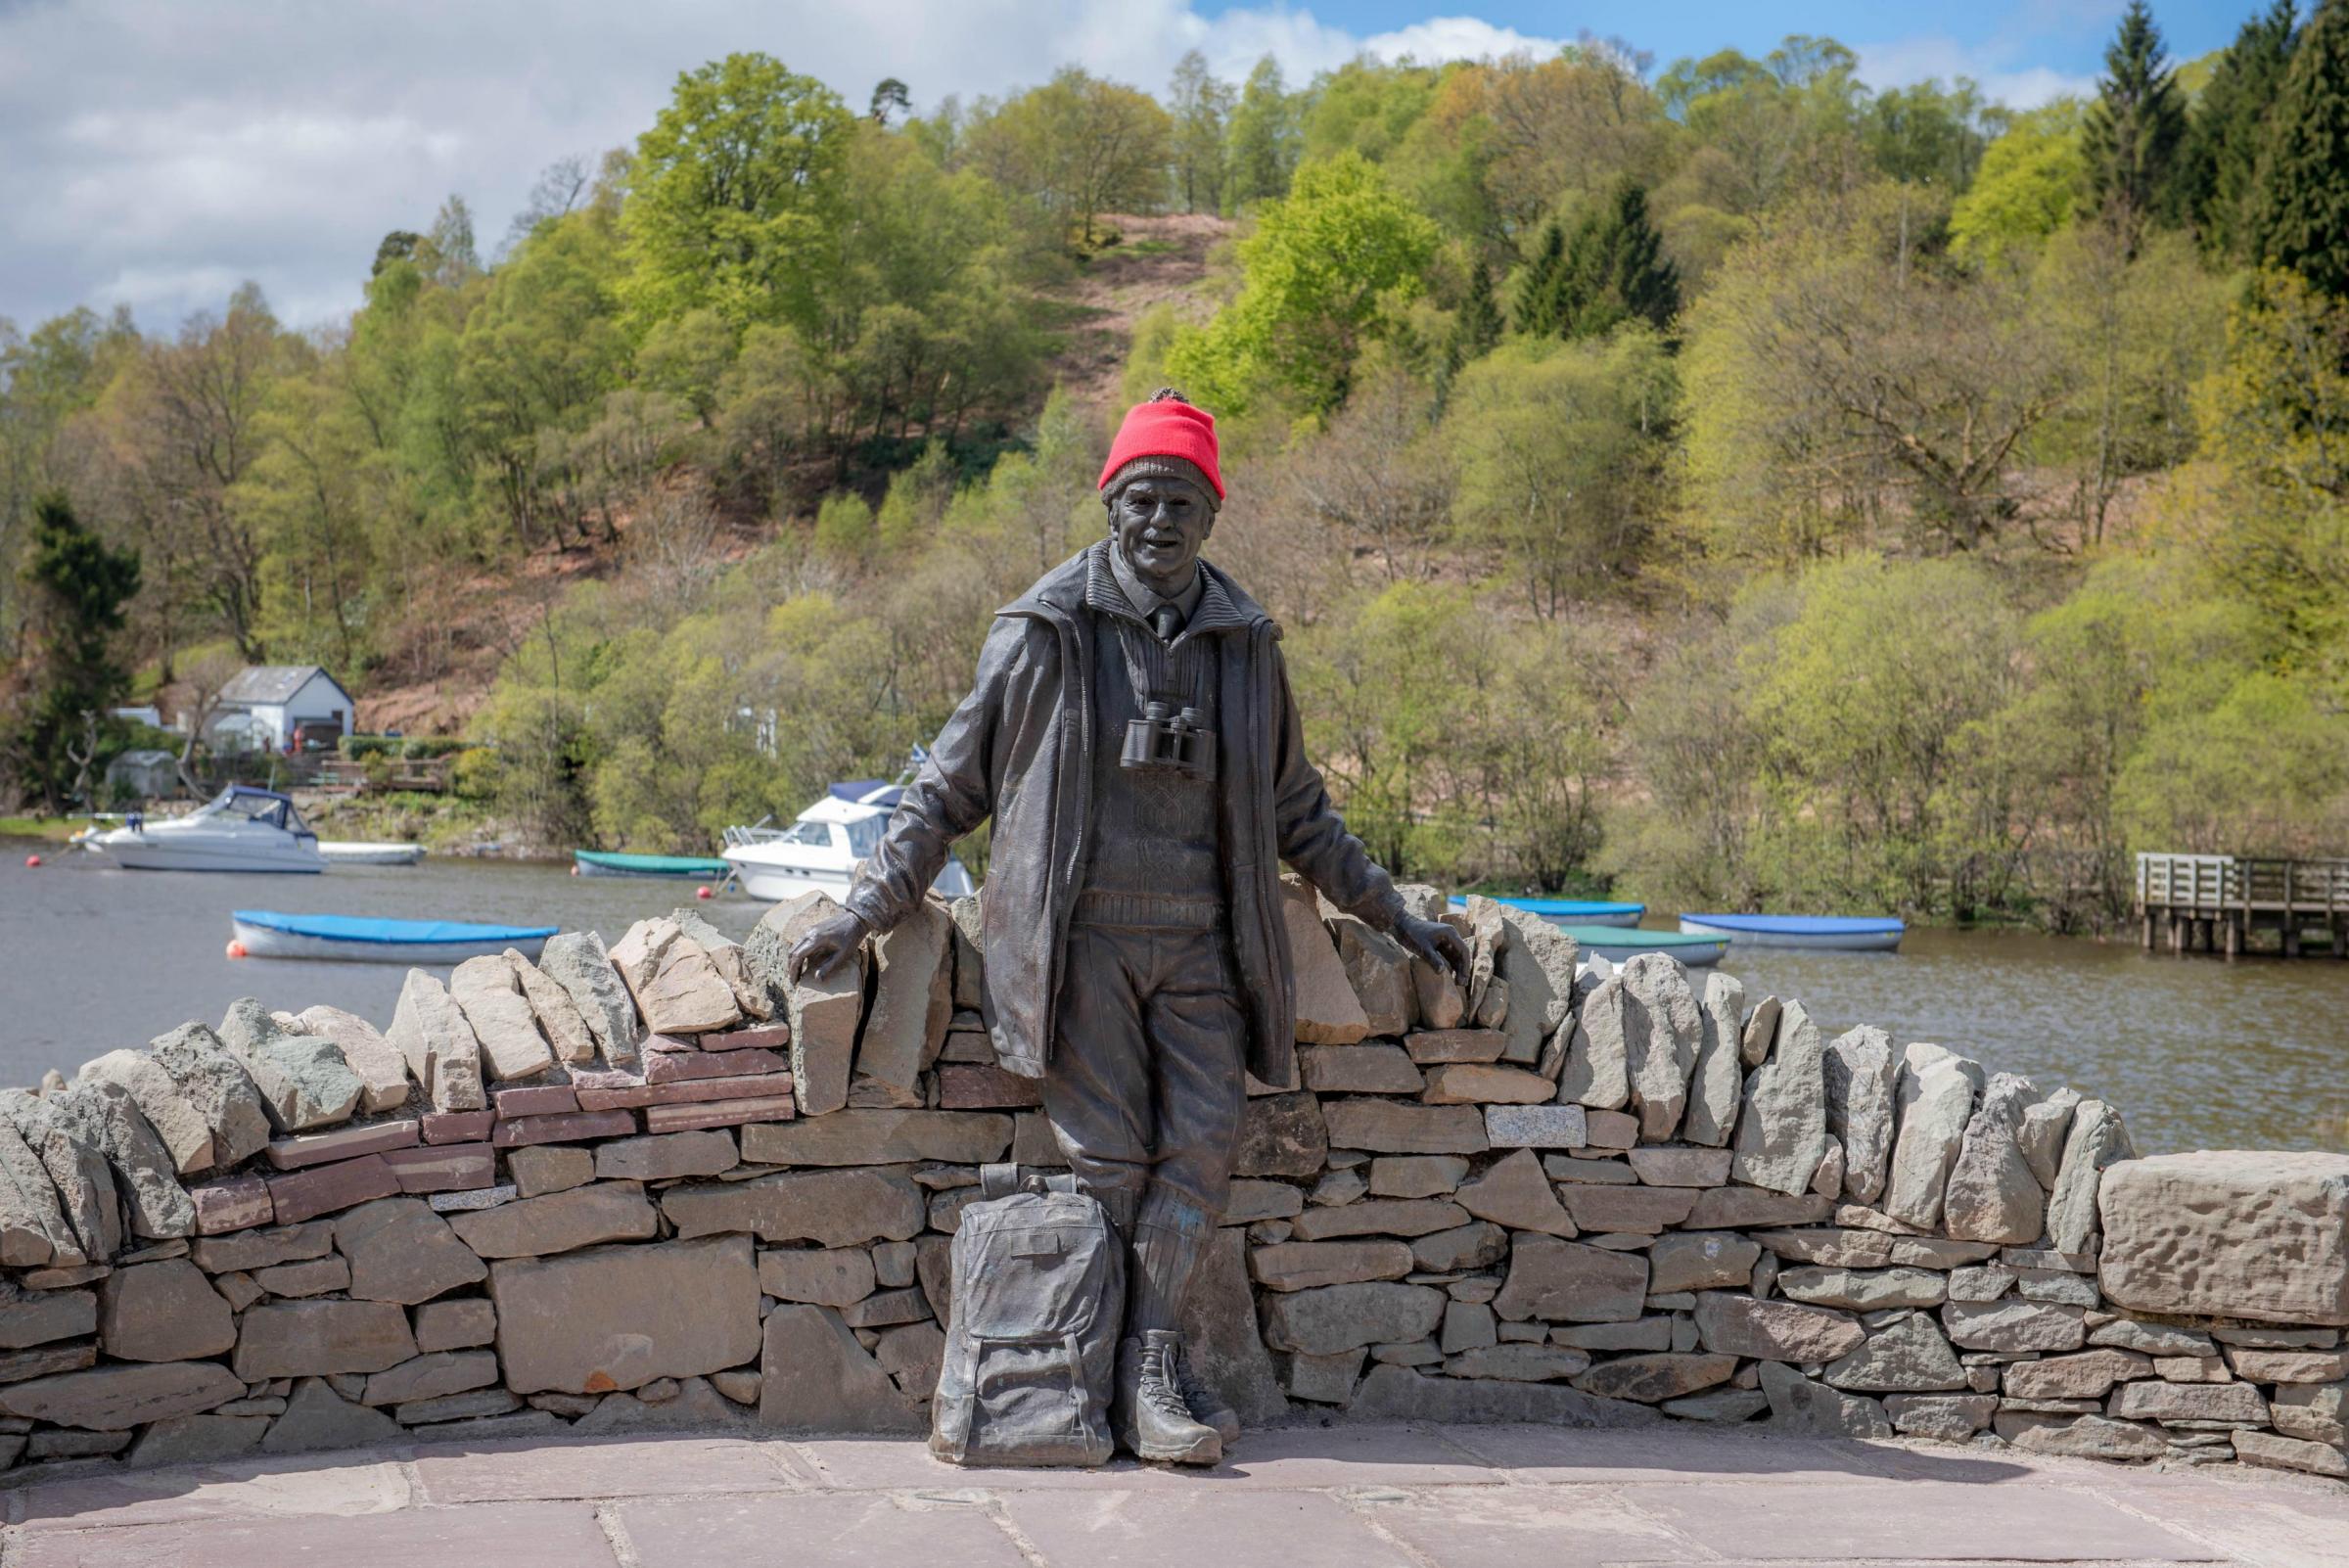 Loch Lomond Tom Weir memorial site donations raided by callous thieves